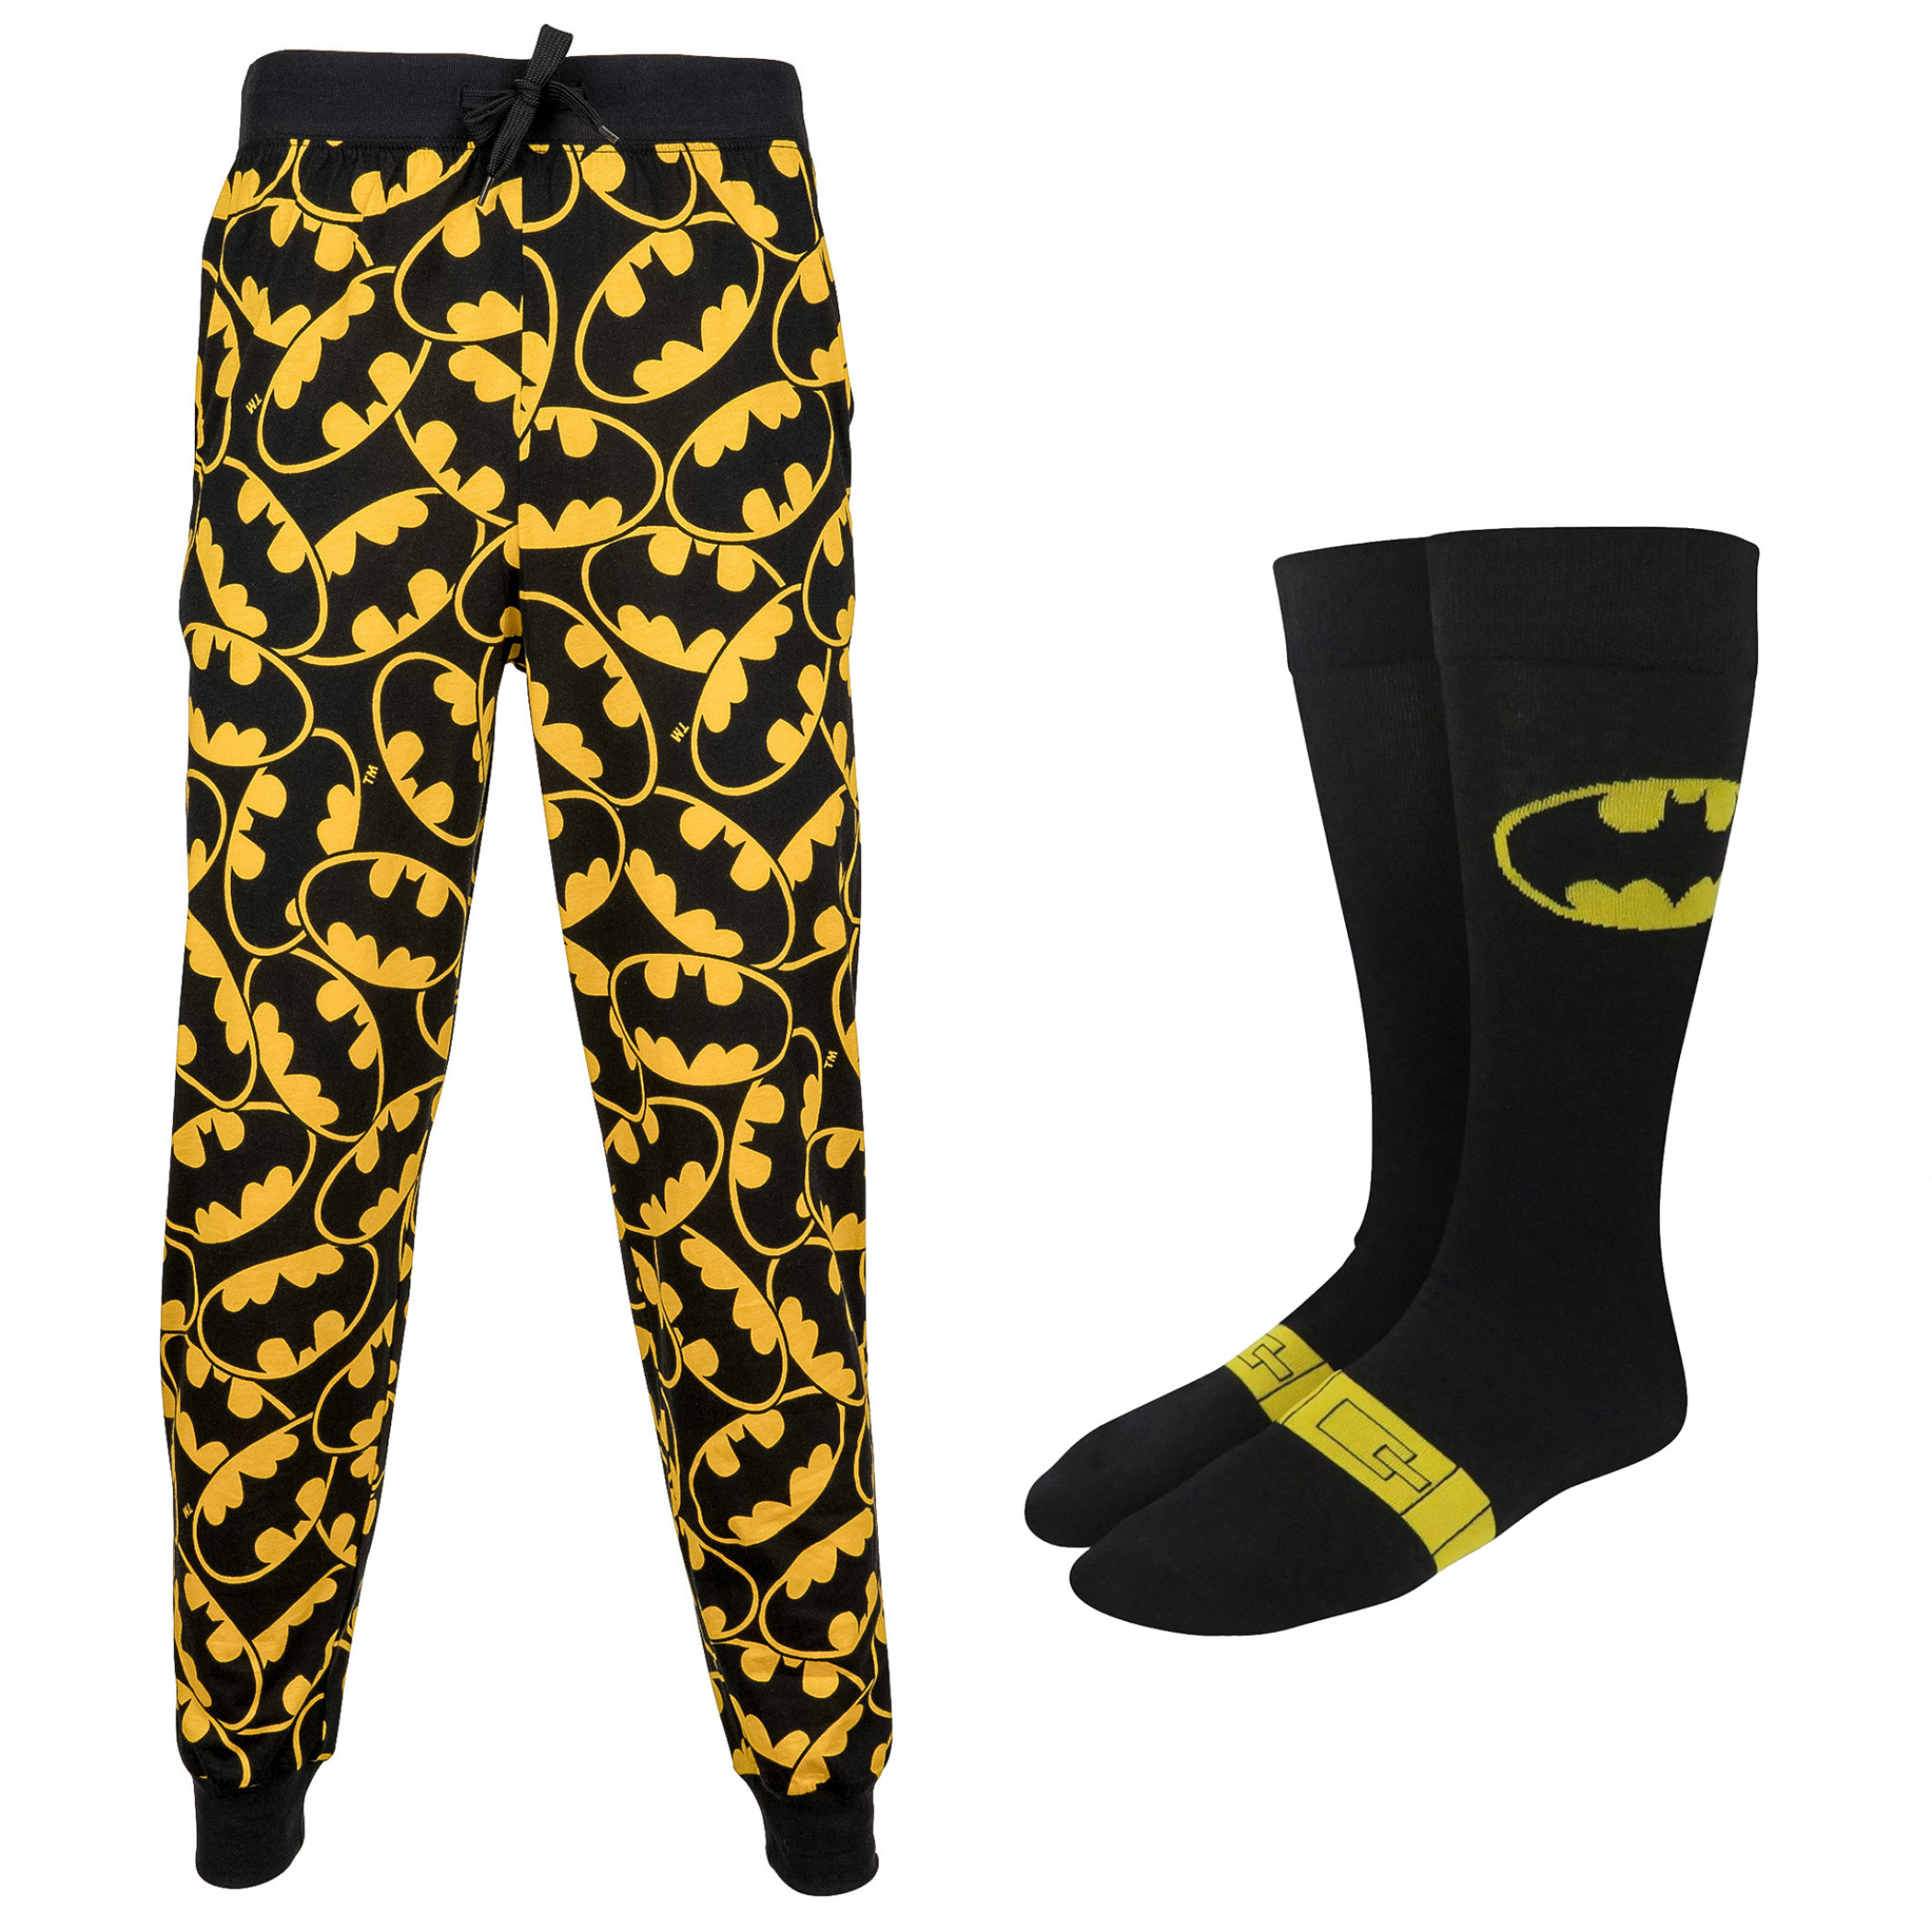 Batman Sleep Pants & Socks Bundle